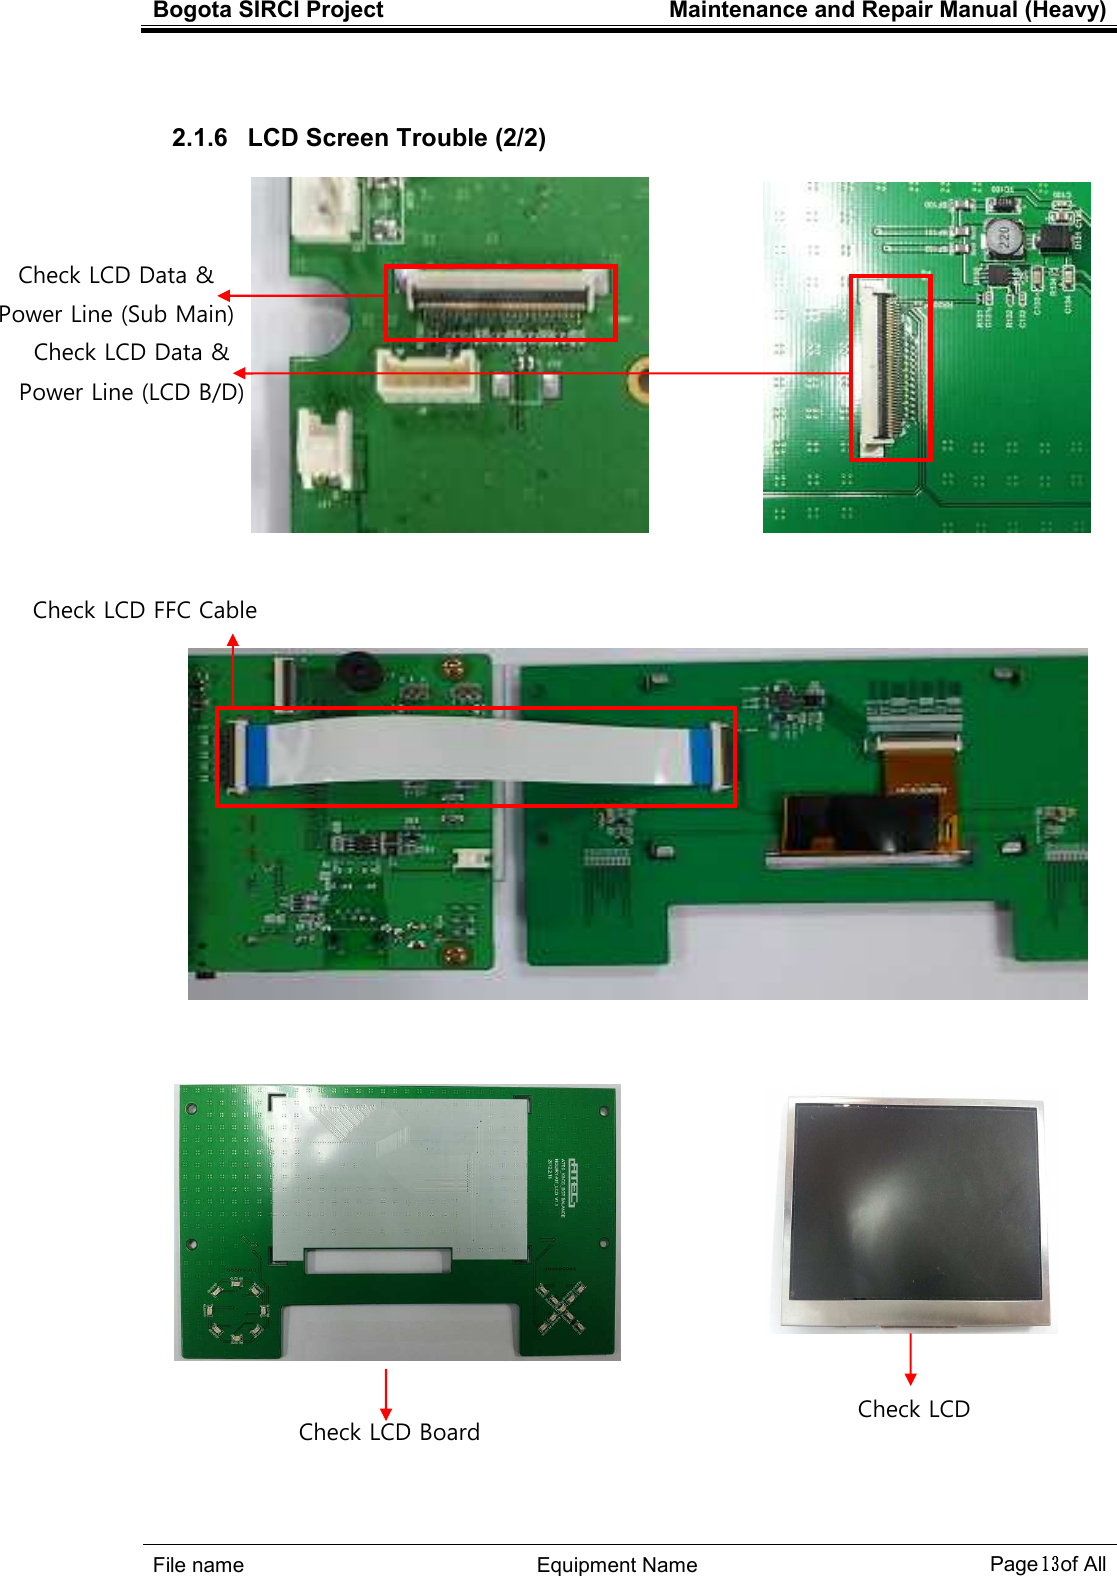 Bogota SIRCI Project  Maintenance and Repair Manual (Heavy)     １３１３１３１３ ! 2.1.6   LCD Screen Trouble (2/2)       Check LCD Data &amp; Power Line (Sub Main) Check LCD Data &amp; Power Line (LCD B/D) Check LCD   Check LCD FFC Cable  Check LCD Board  